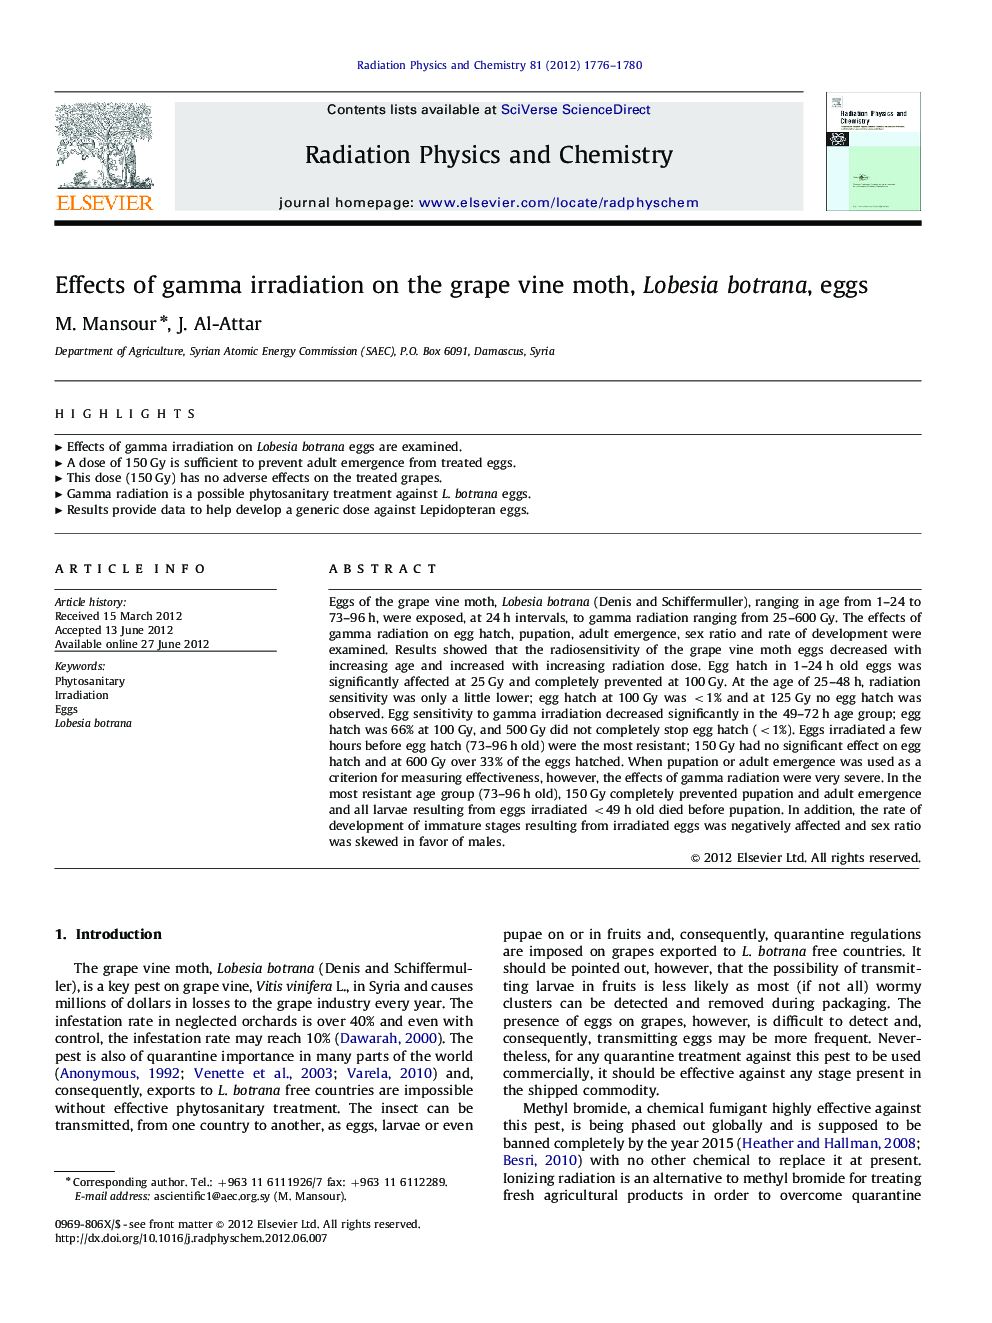 Effects of gamma irradiation on the grape vine moth, Lobesia botrana, eggs